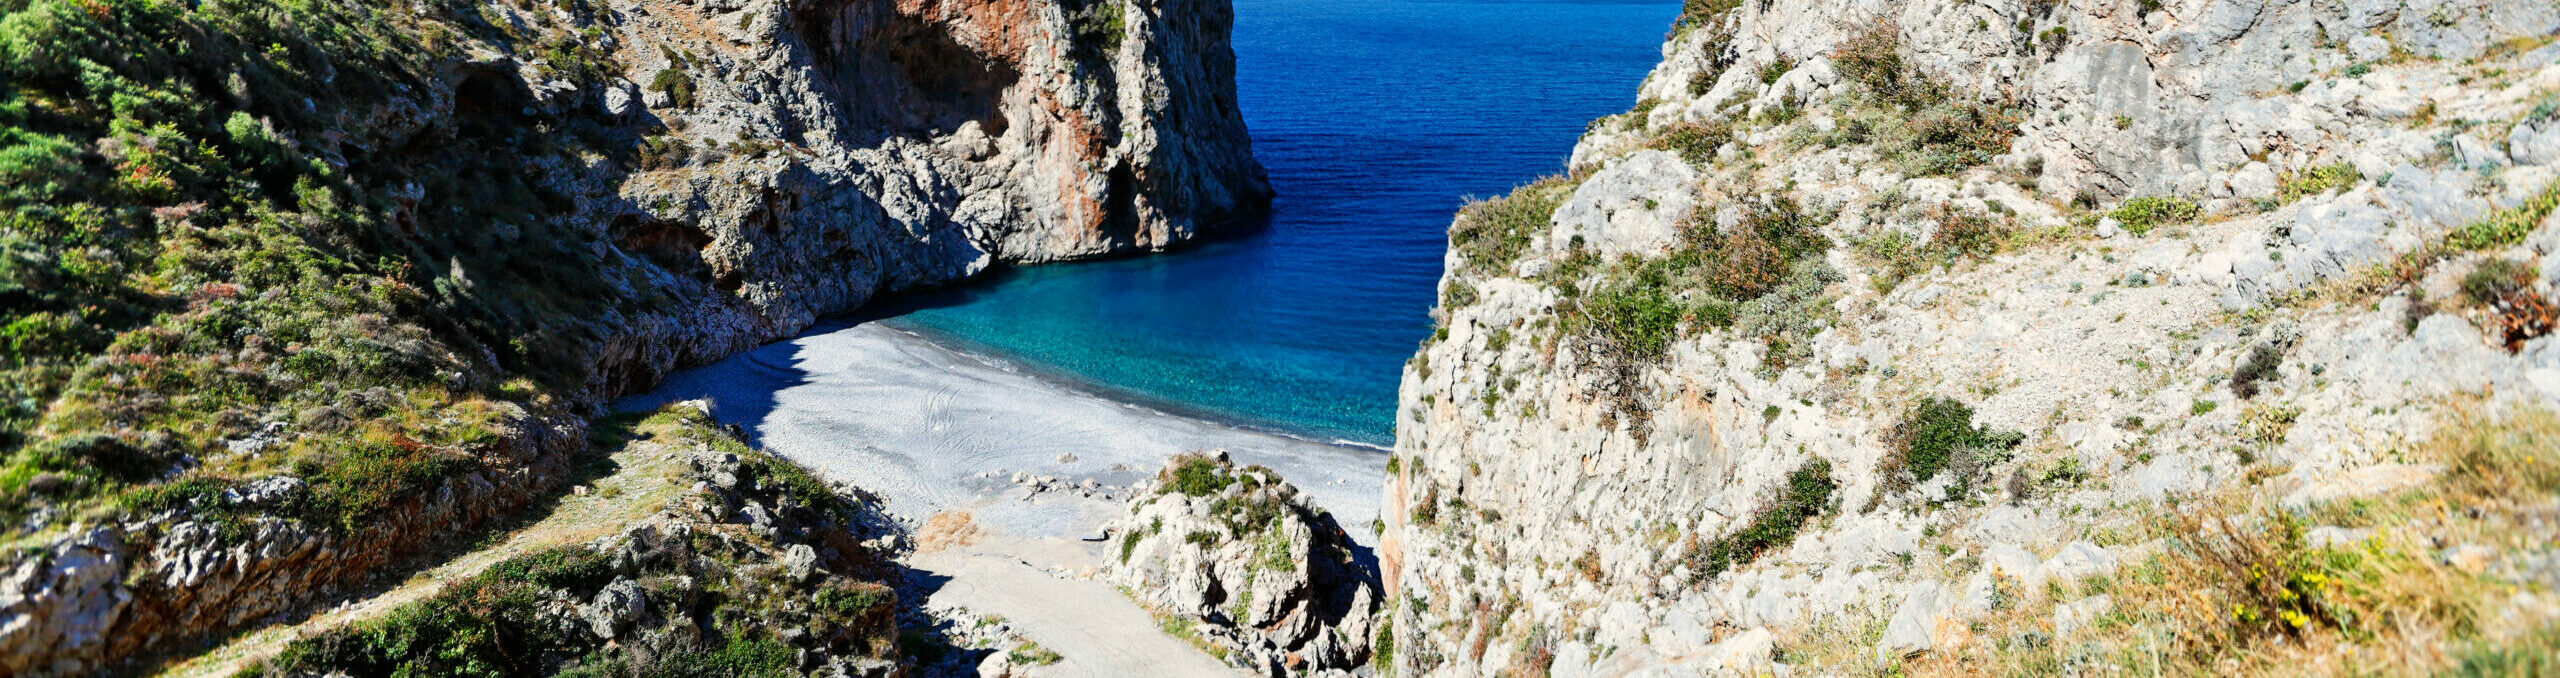 Vythouri: A beach with a rare phenomenon in Evia